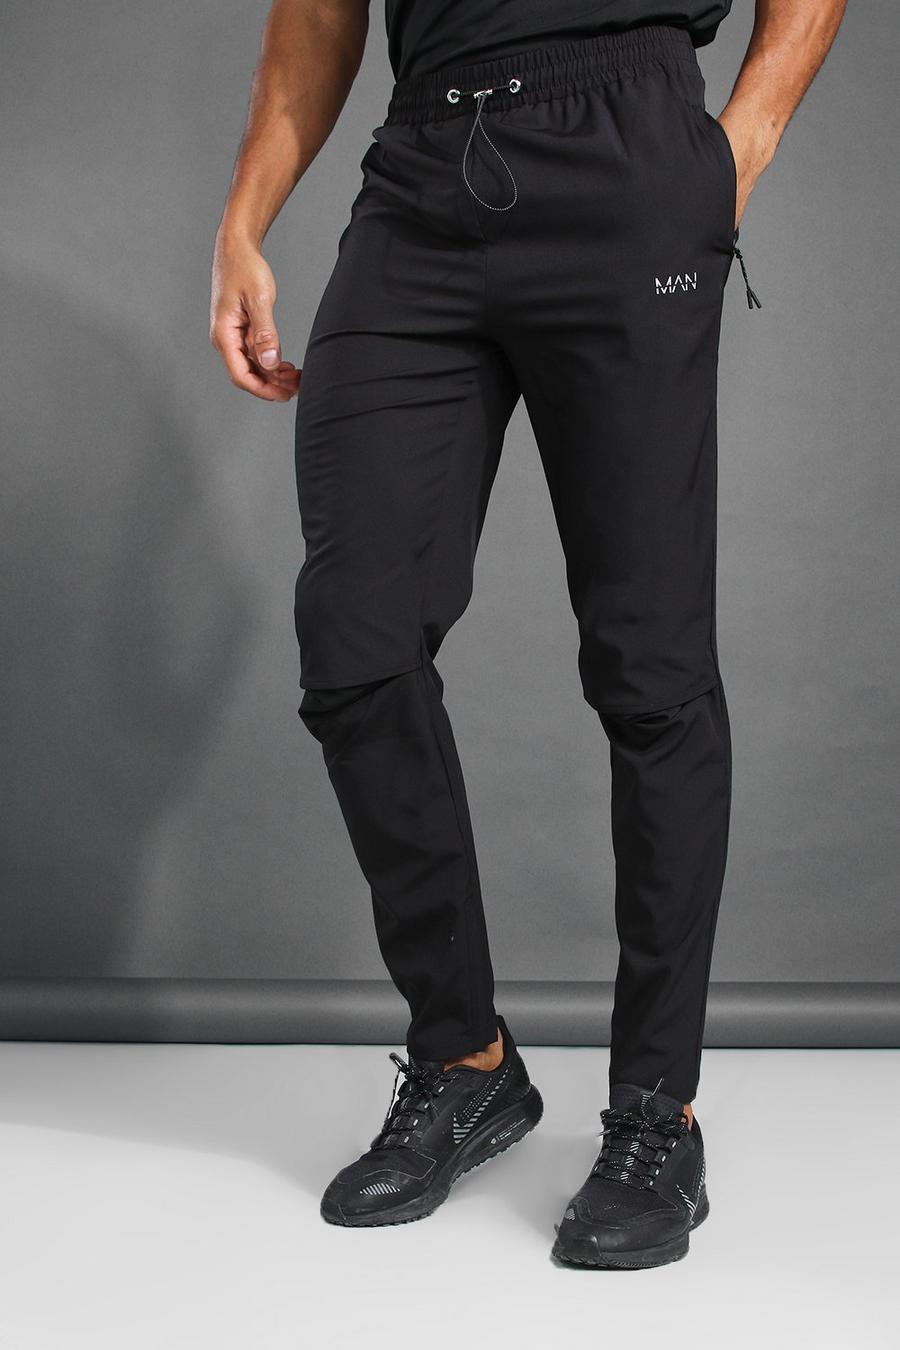 Pantalón deportivo MAN Active ajustado, Negro nero image number 1